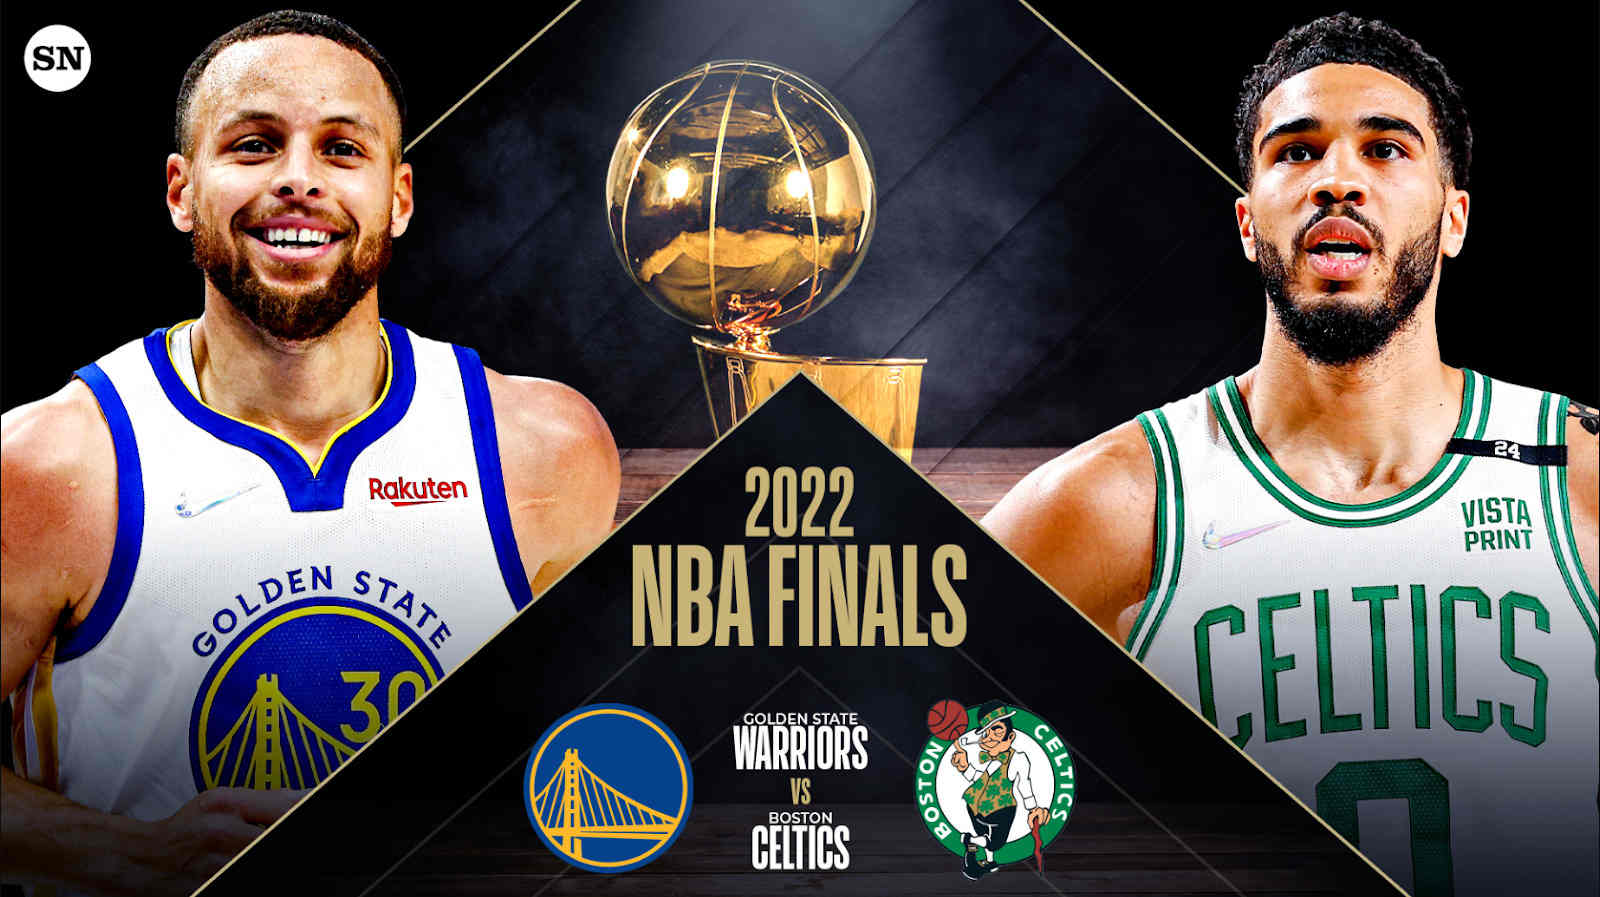 Warriors vs Celtics Watch live streams free on Reddit